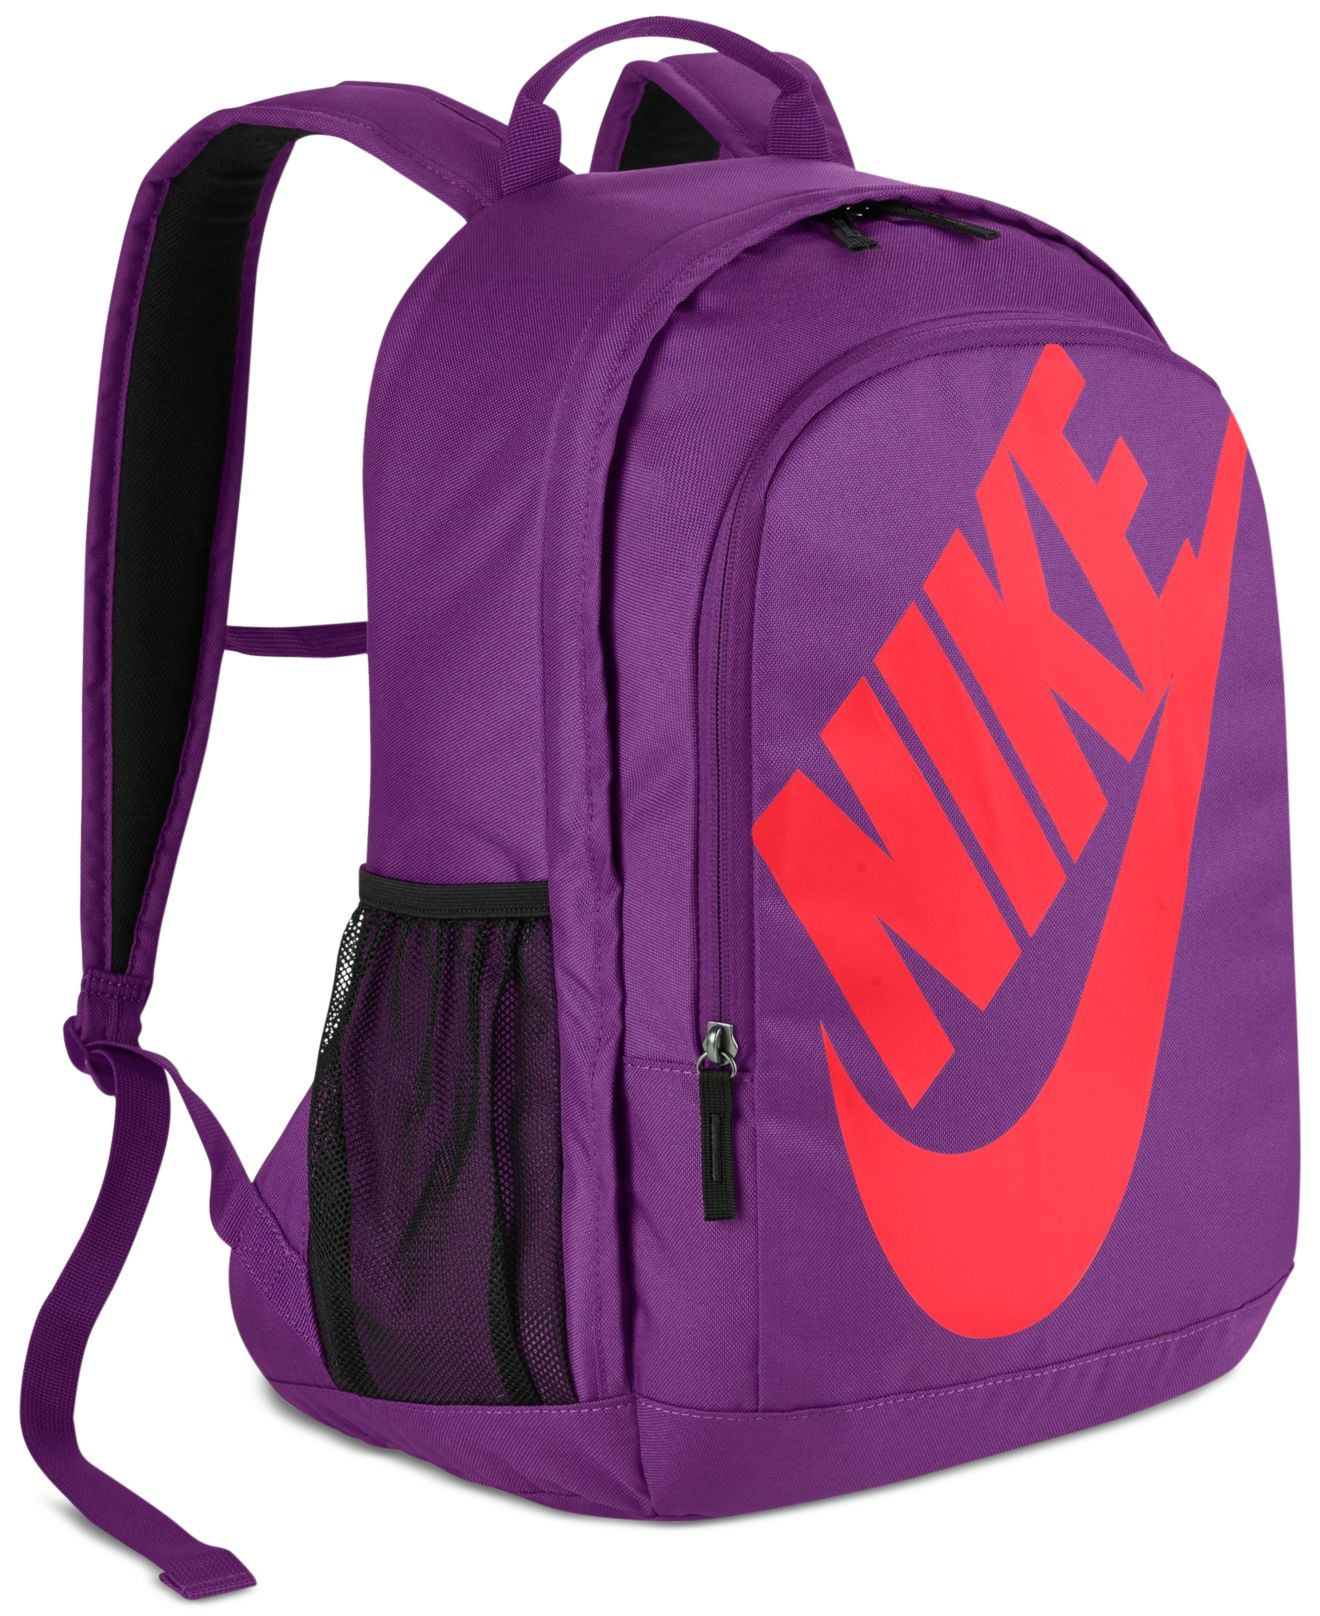 Nike Synthetic Hayward Futura 2.0 Backpack in Purple - Lyst